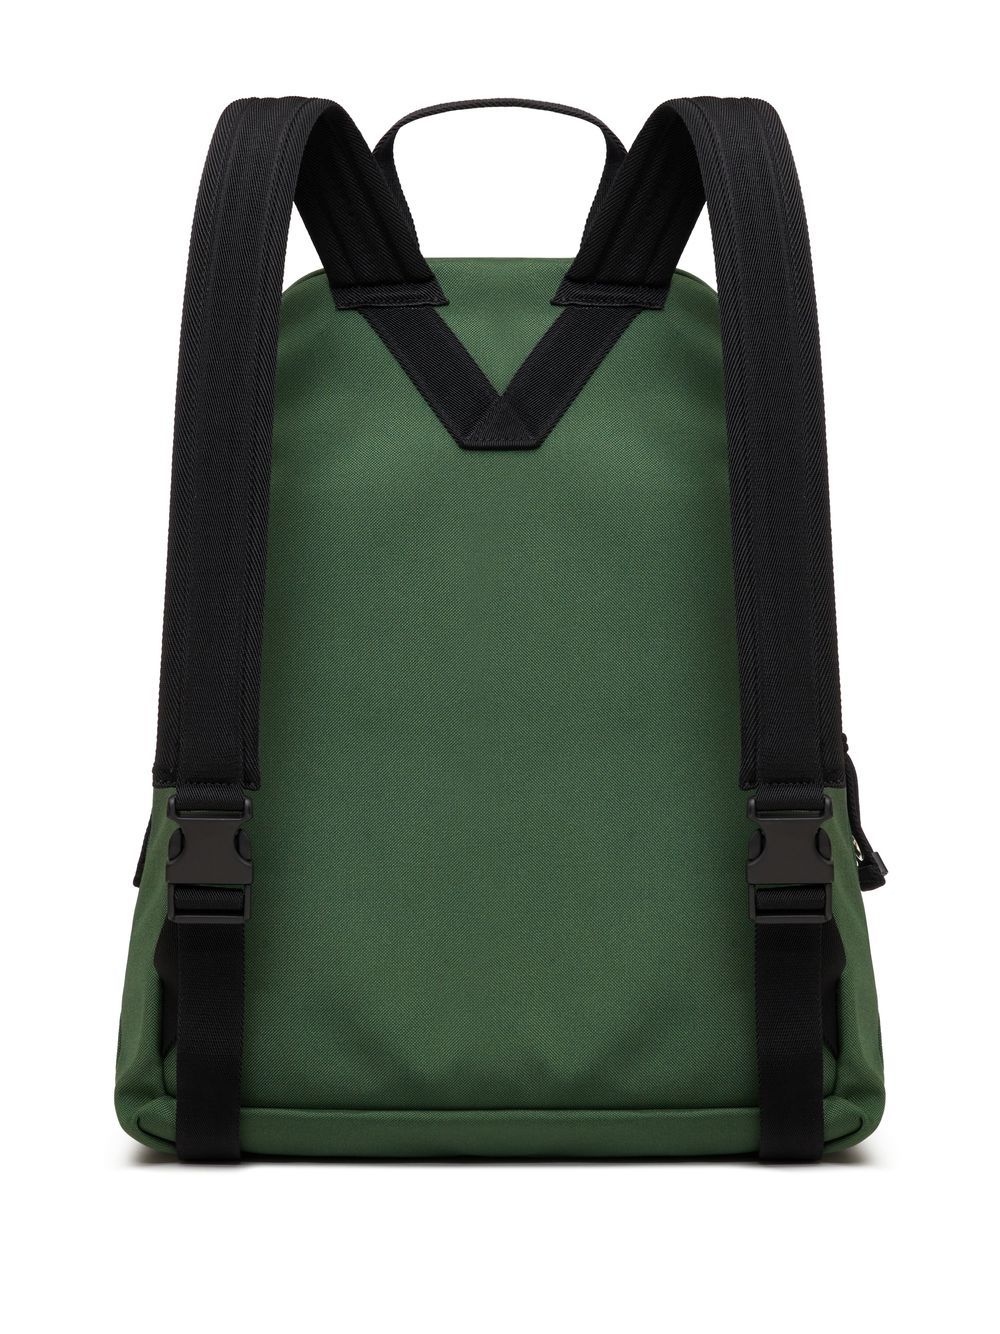 VALENTINO GARAVANI Dark Green Logo-Print Raffia Backpack for Men